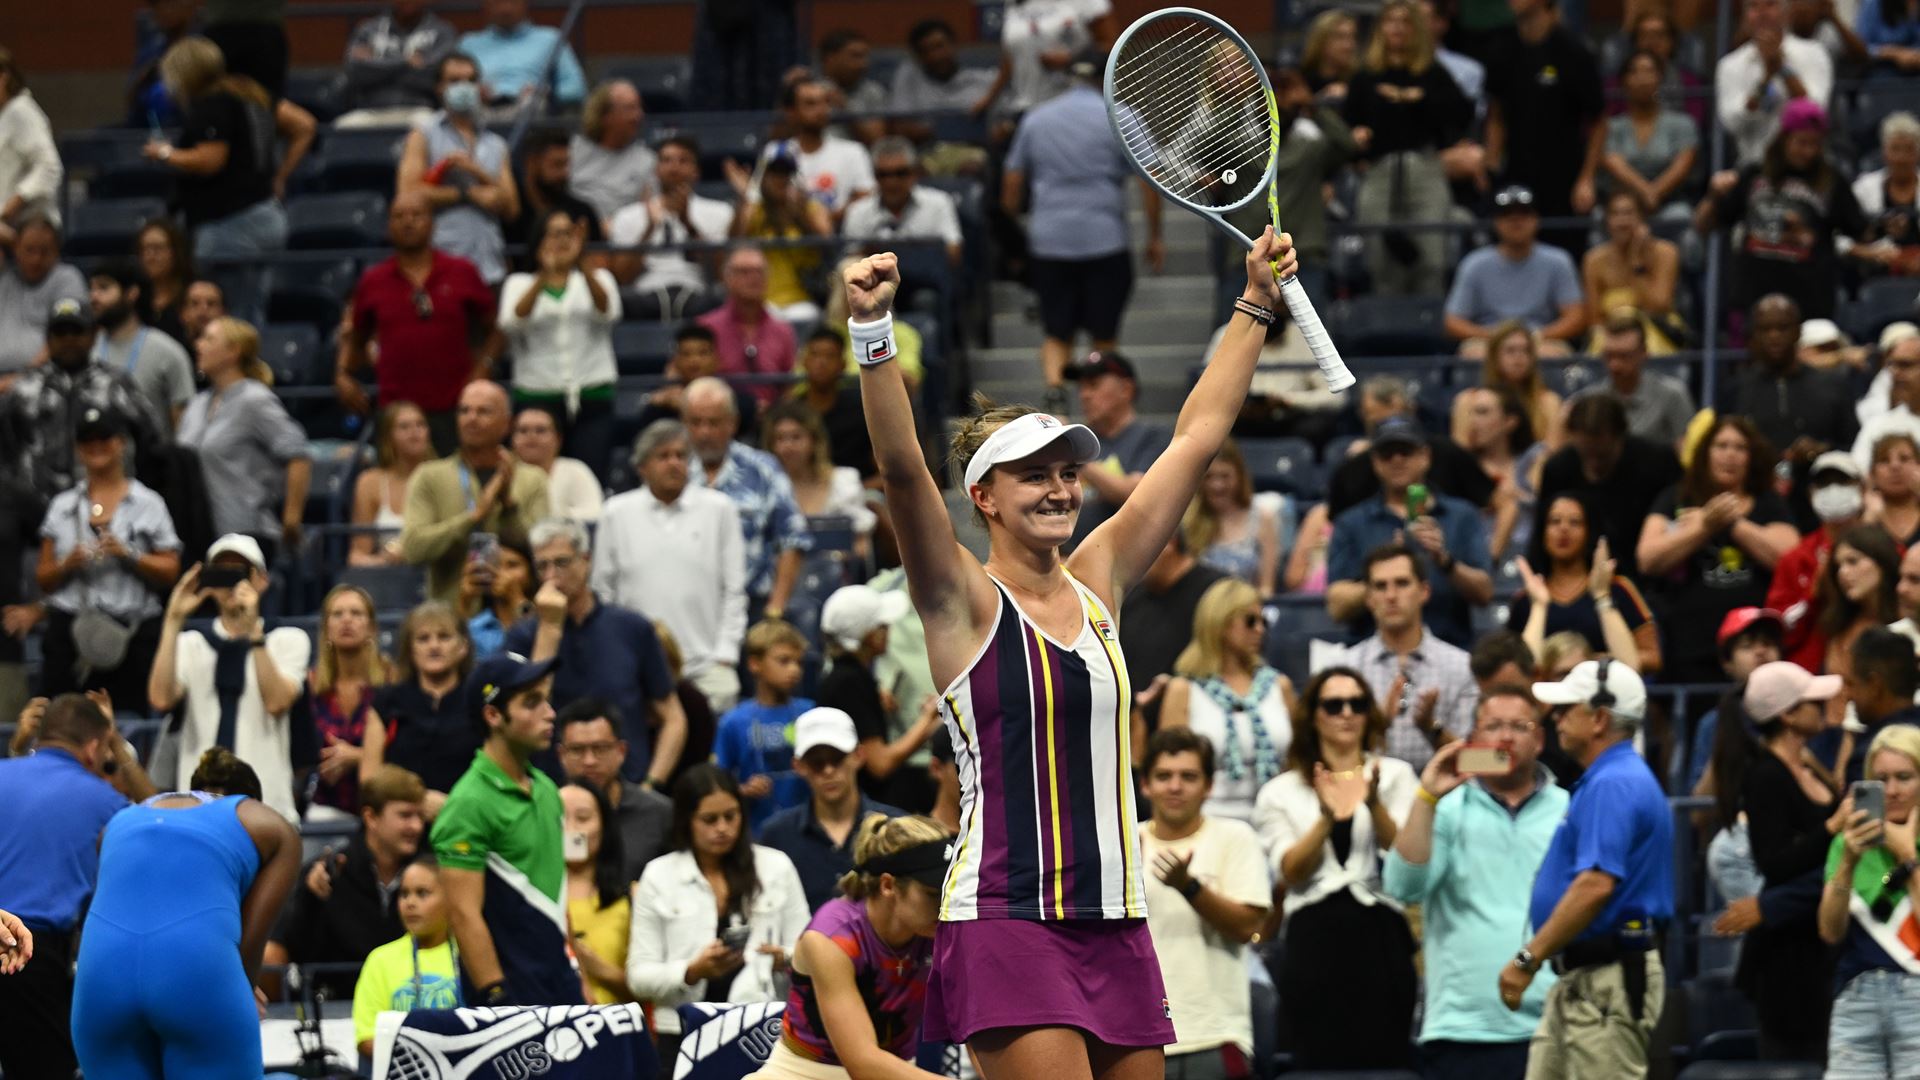 FILA's Barbora Krejcikova Wins Grand Slam Doubles Title in New York, Completes Career Golden Slam